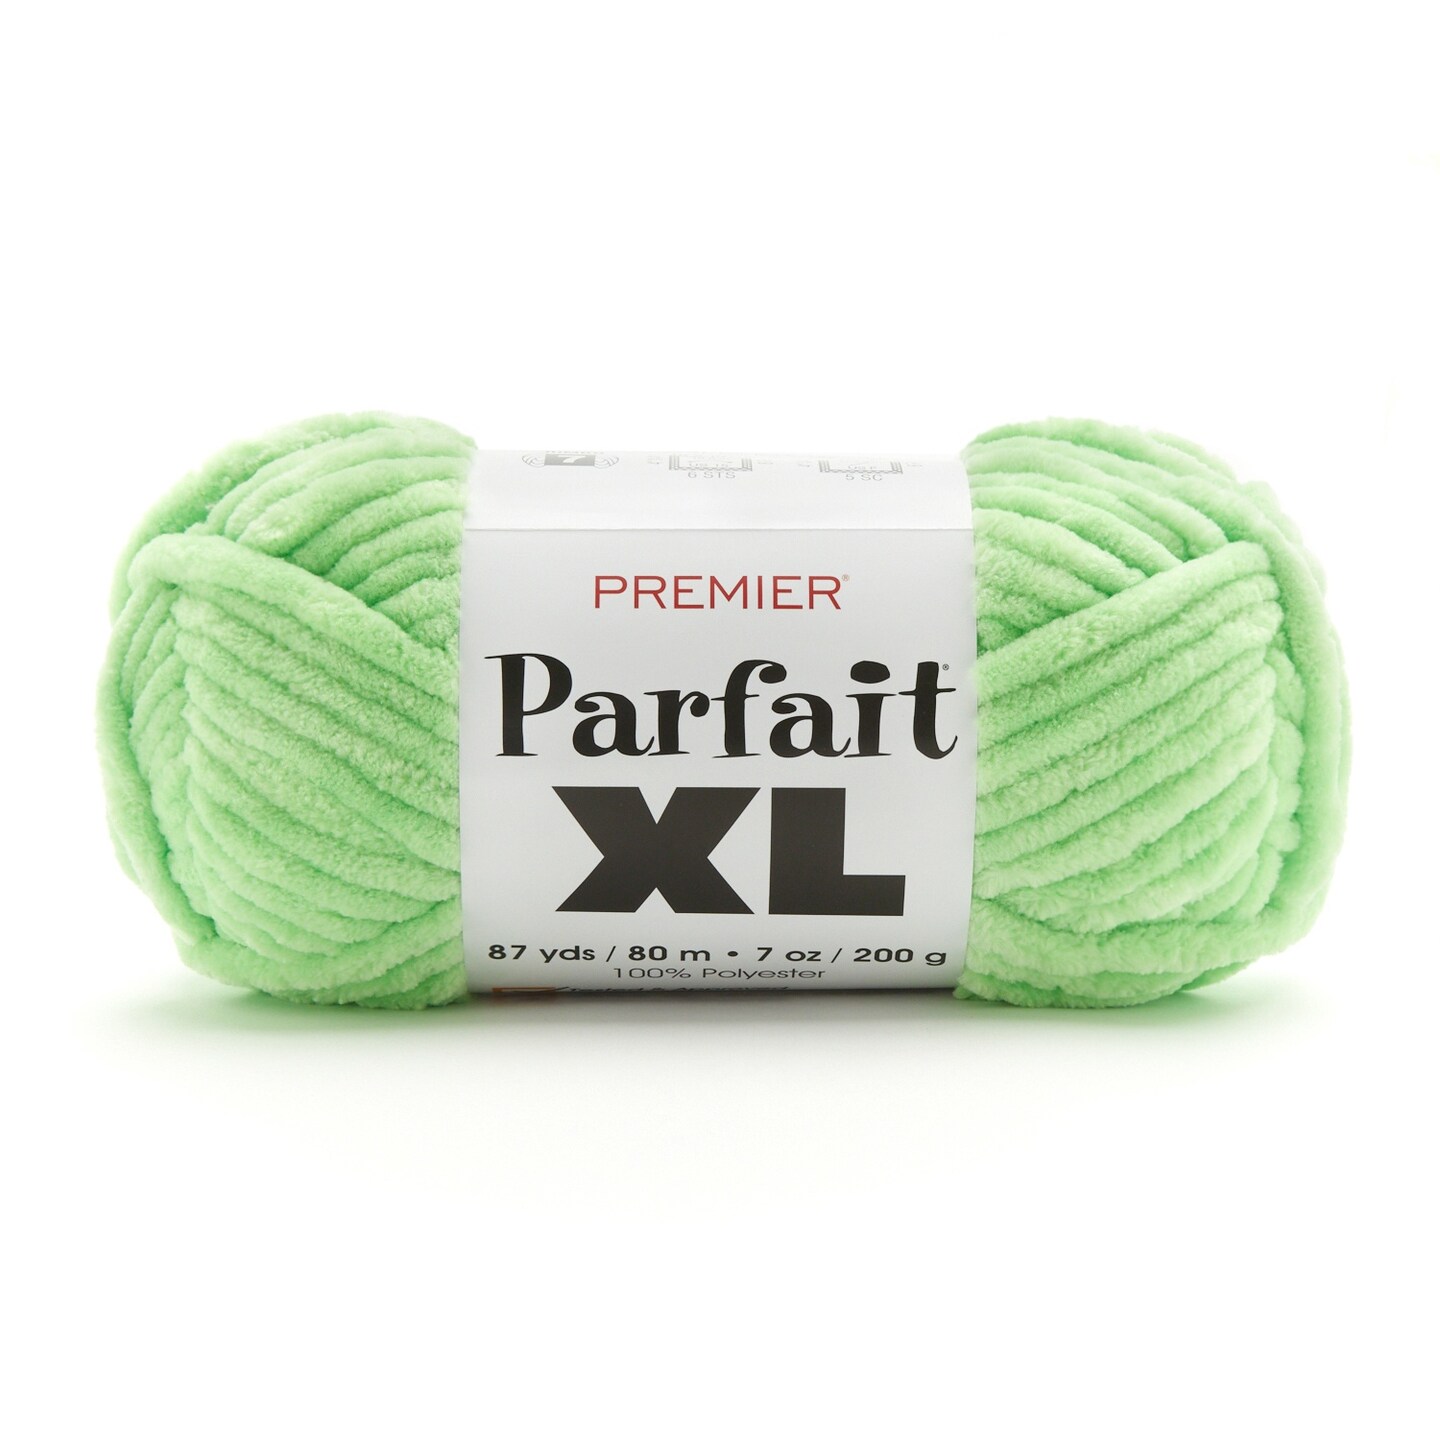 Premier Parfait Xl Yarn-Key Lime